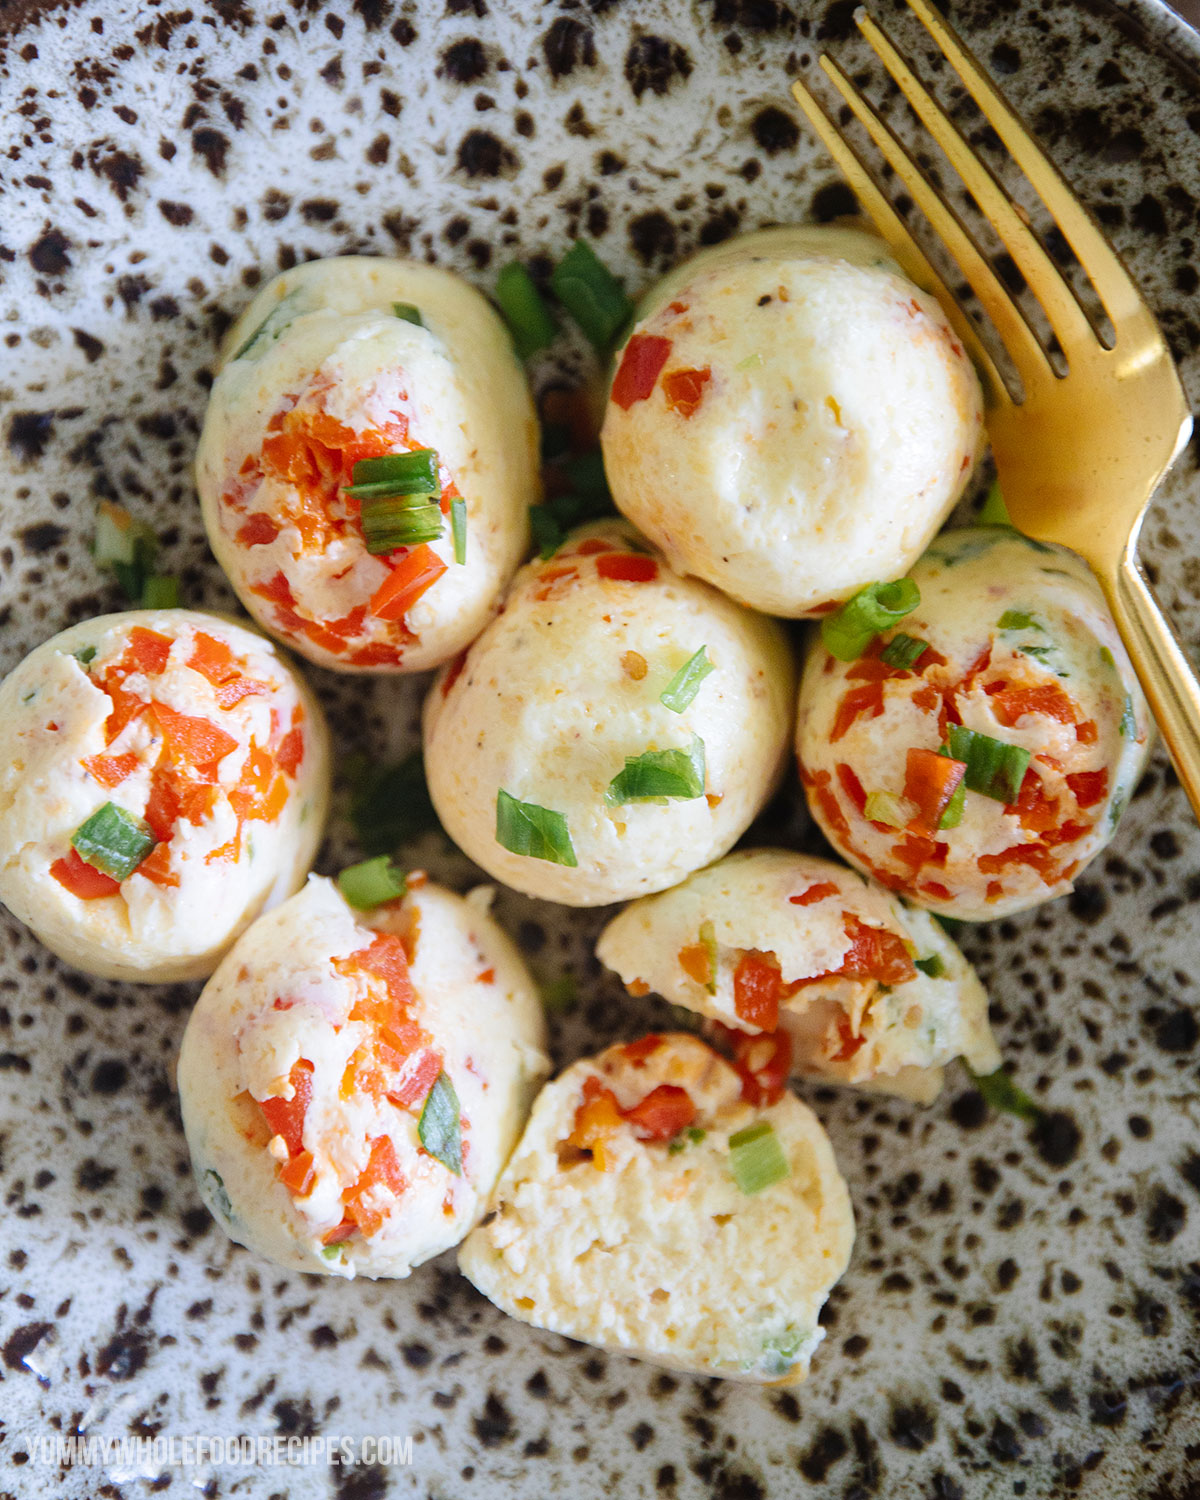 Recipes To Make With Egg Bite Molds : My Crazy Good Life